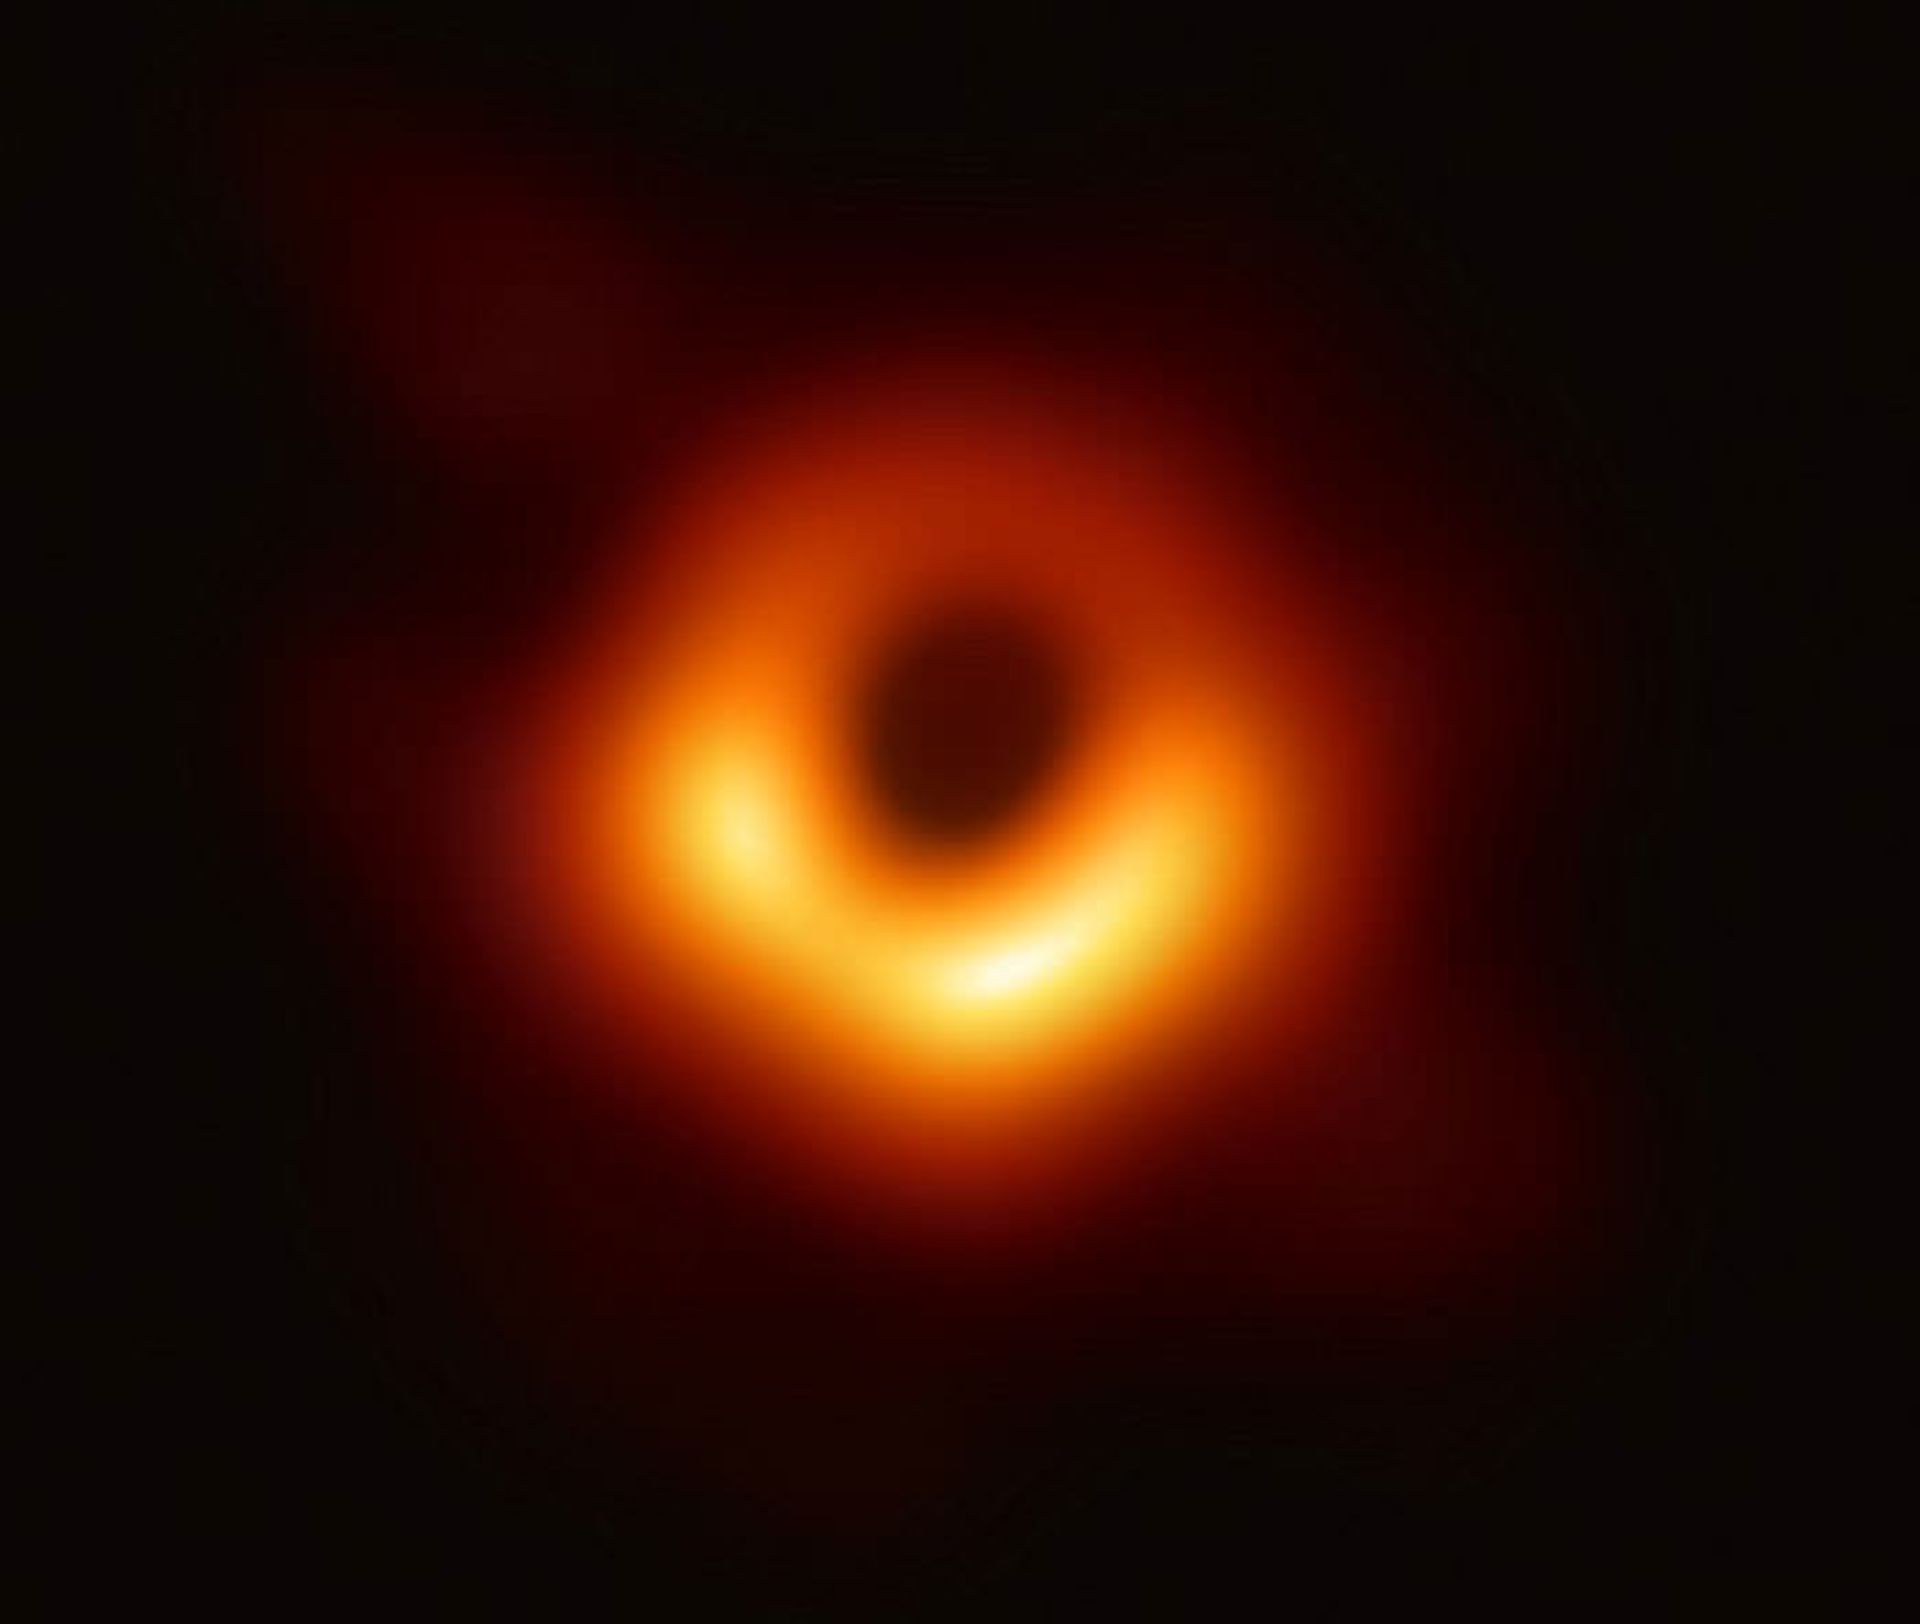 اولین تصویر سیاهچاله